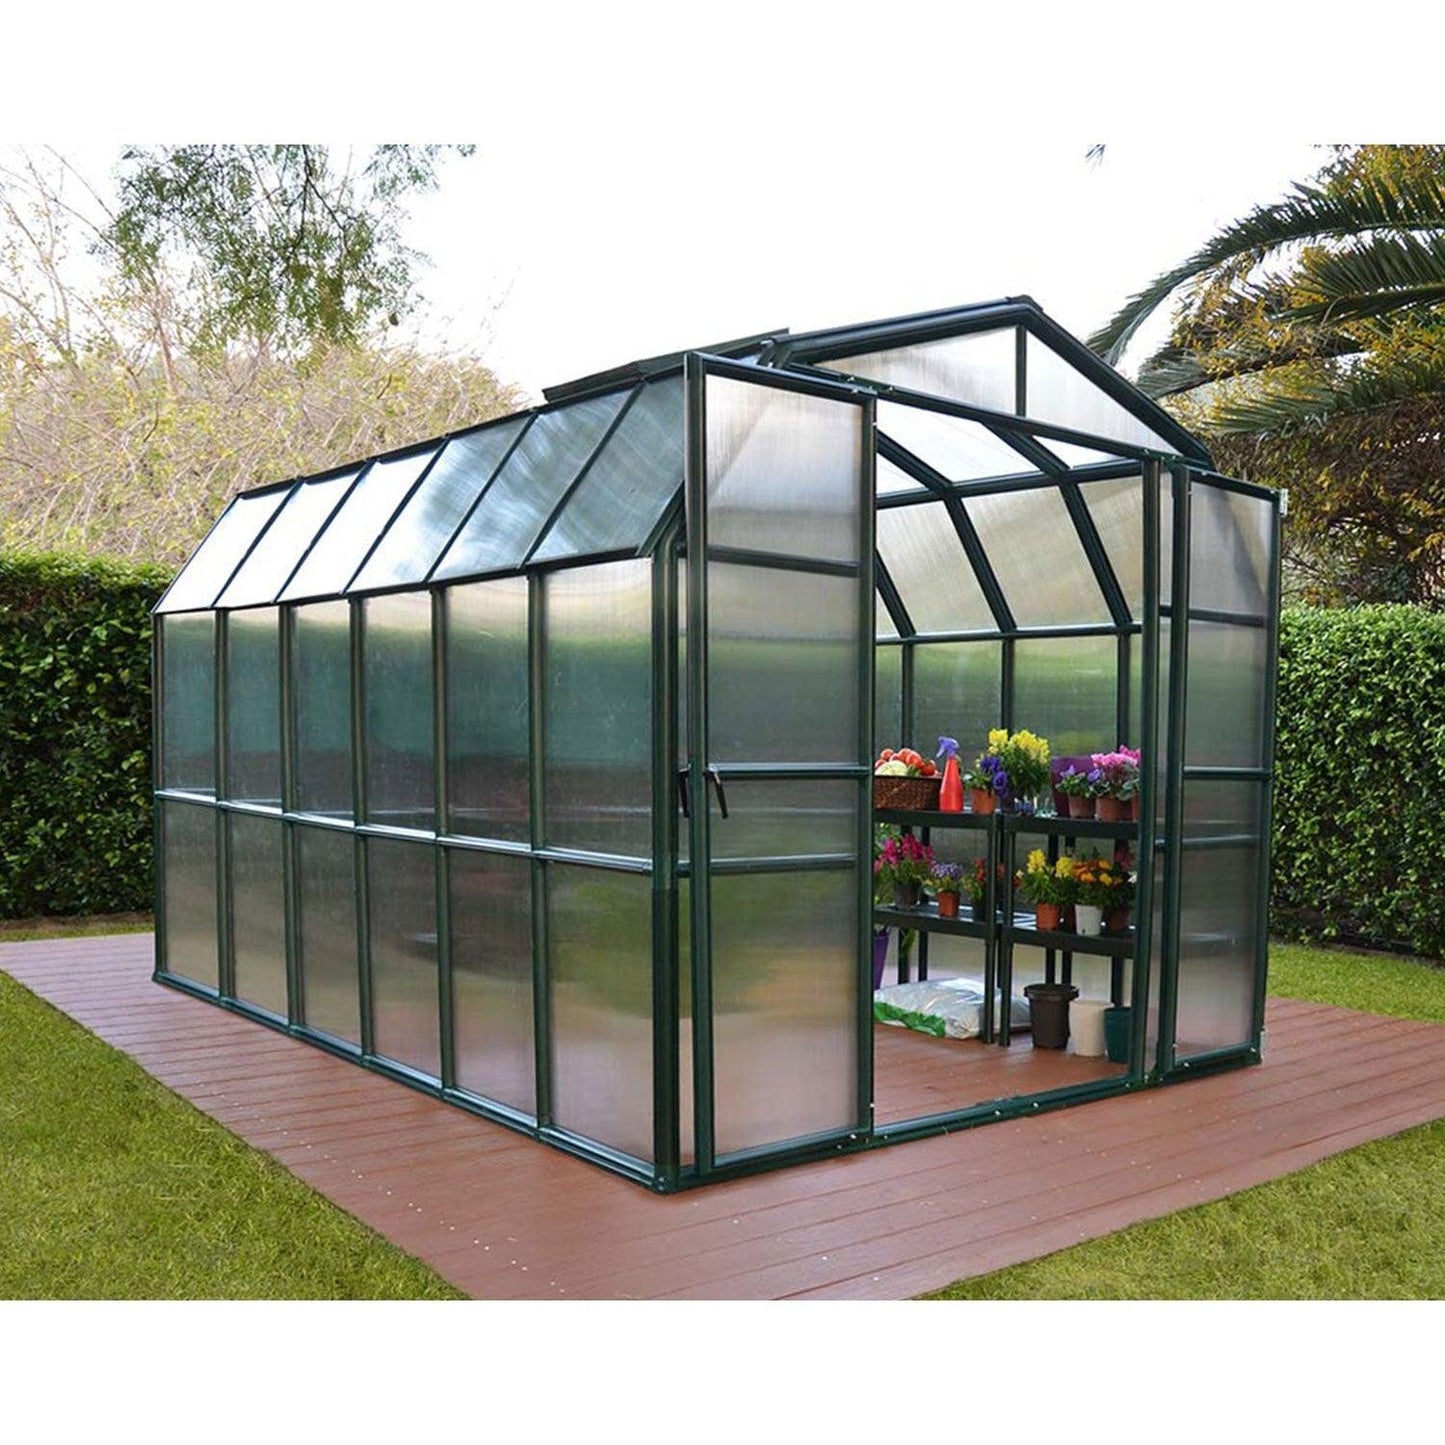 Rion Grand Gardener Greenhouse 8 x 12 ft. - Delightful Yard